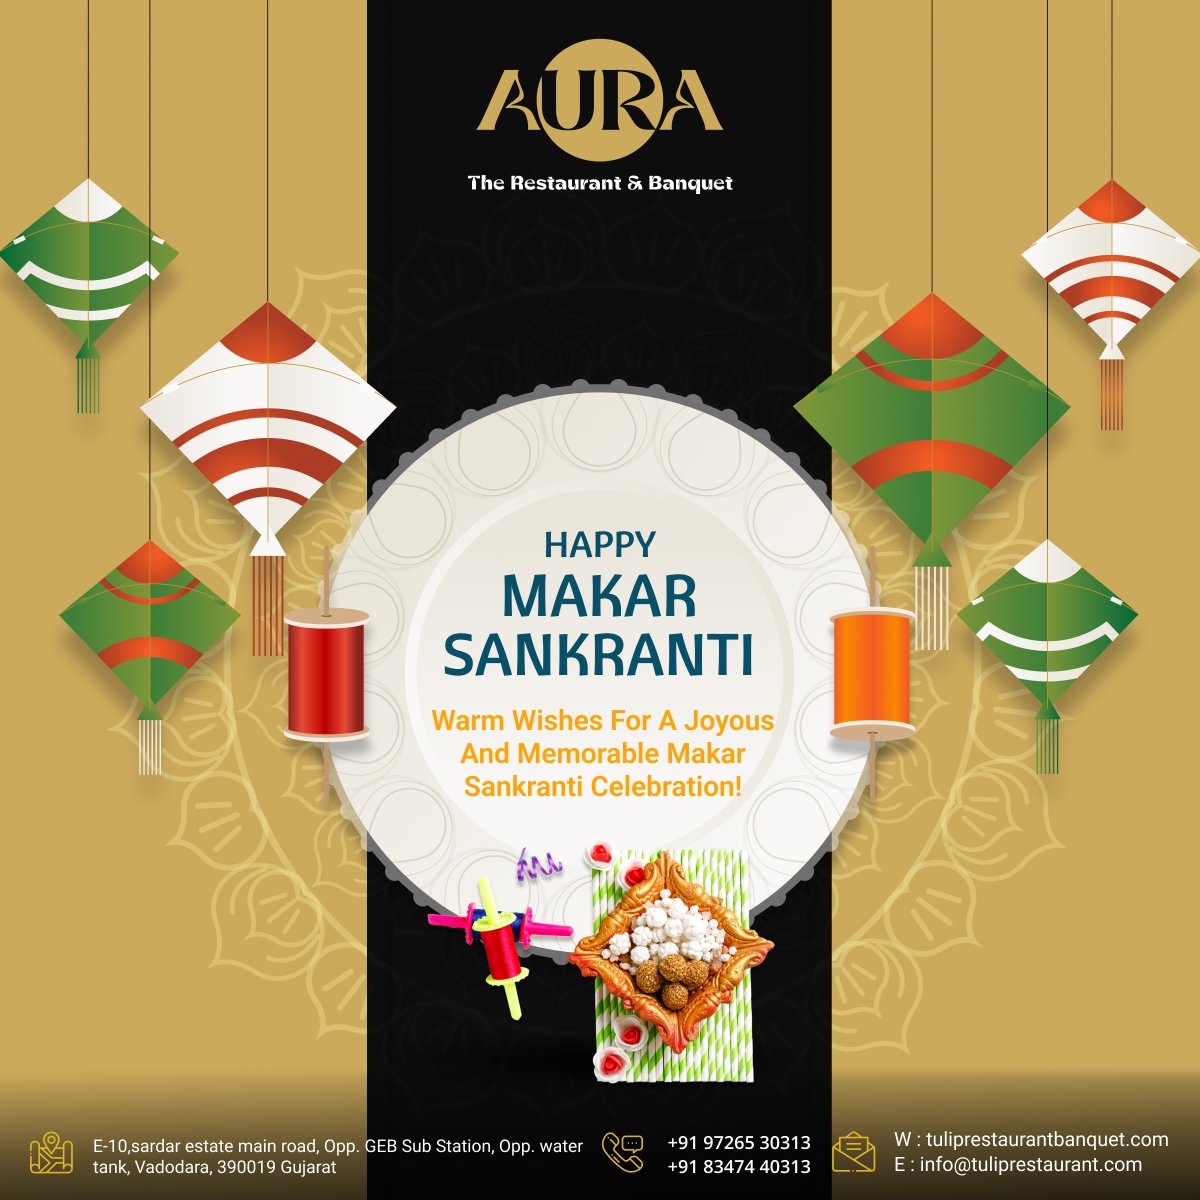 Happy Makar Sankranti
Warm wishes for a joyous and memorable Makar Sankranti celebration!

#happymakarsankranti #makarsankranti2024 #happymakarsankranti #uttrayan📷 #tilgul #kitefestival #kitefestival2024 #aura #aurarestaurant #food #chandkheda #ahmedabad